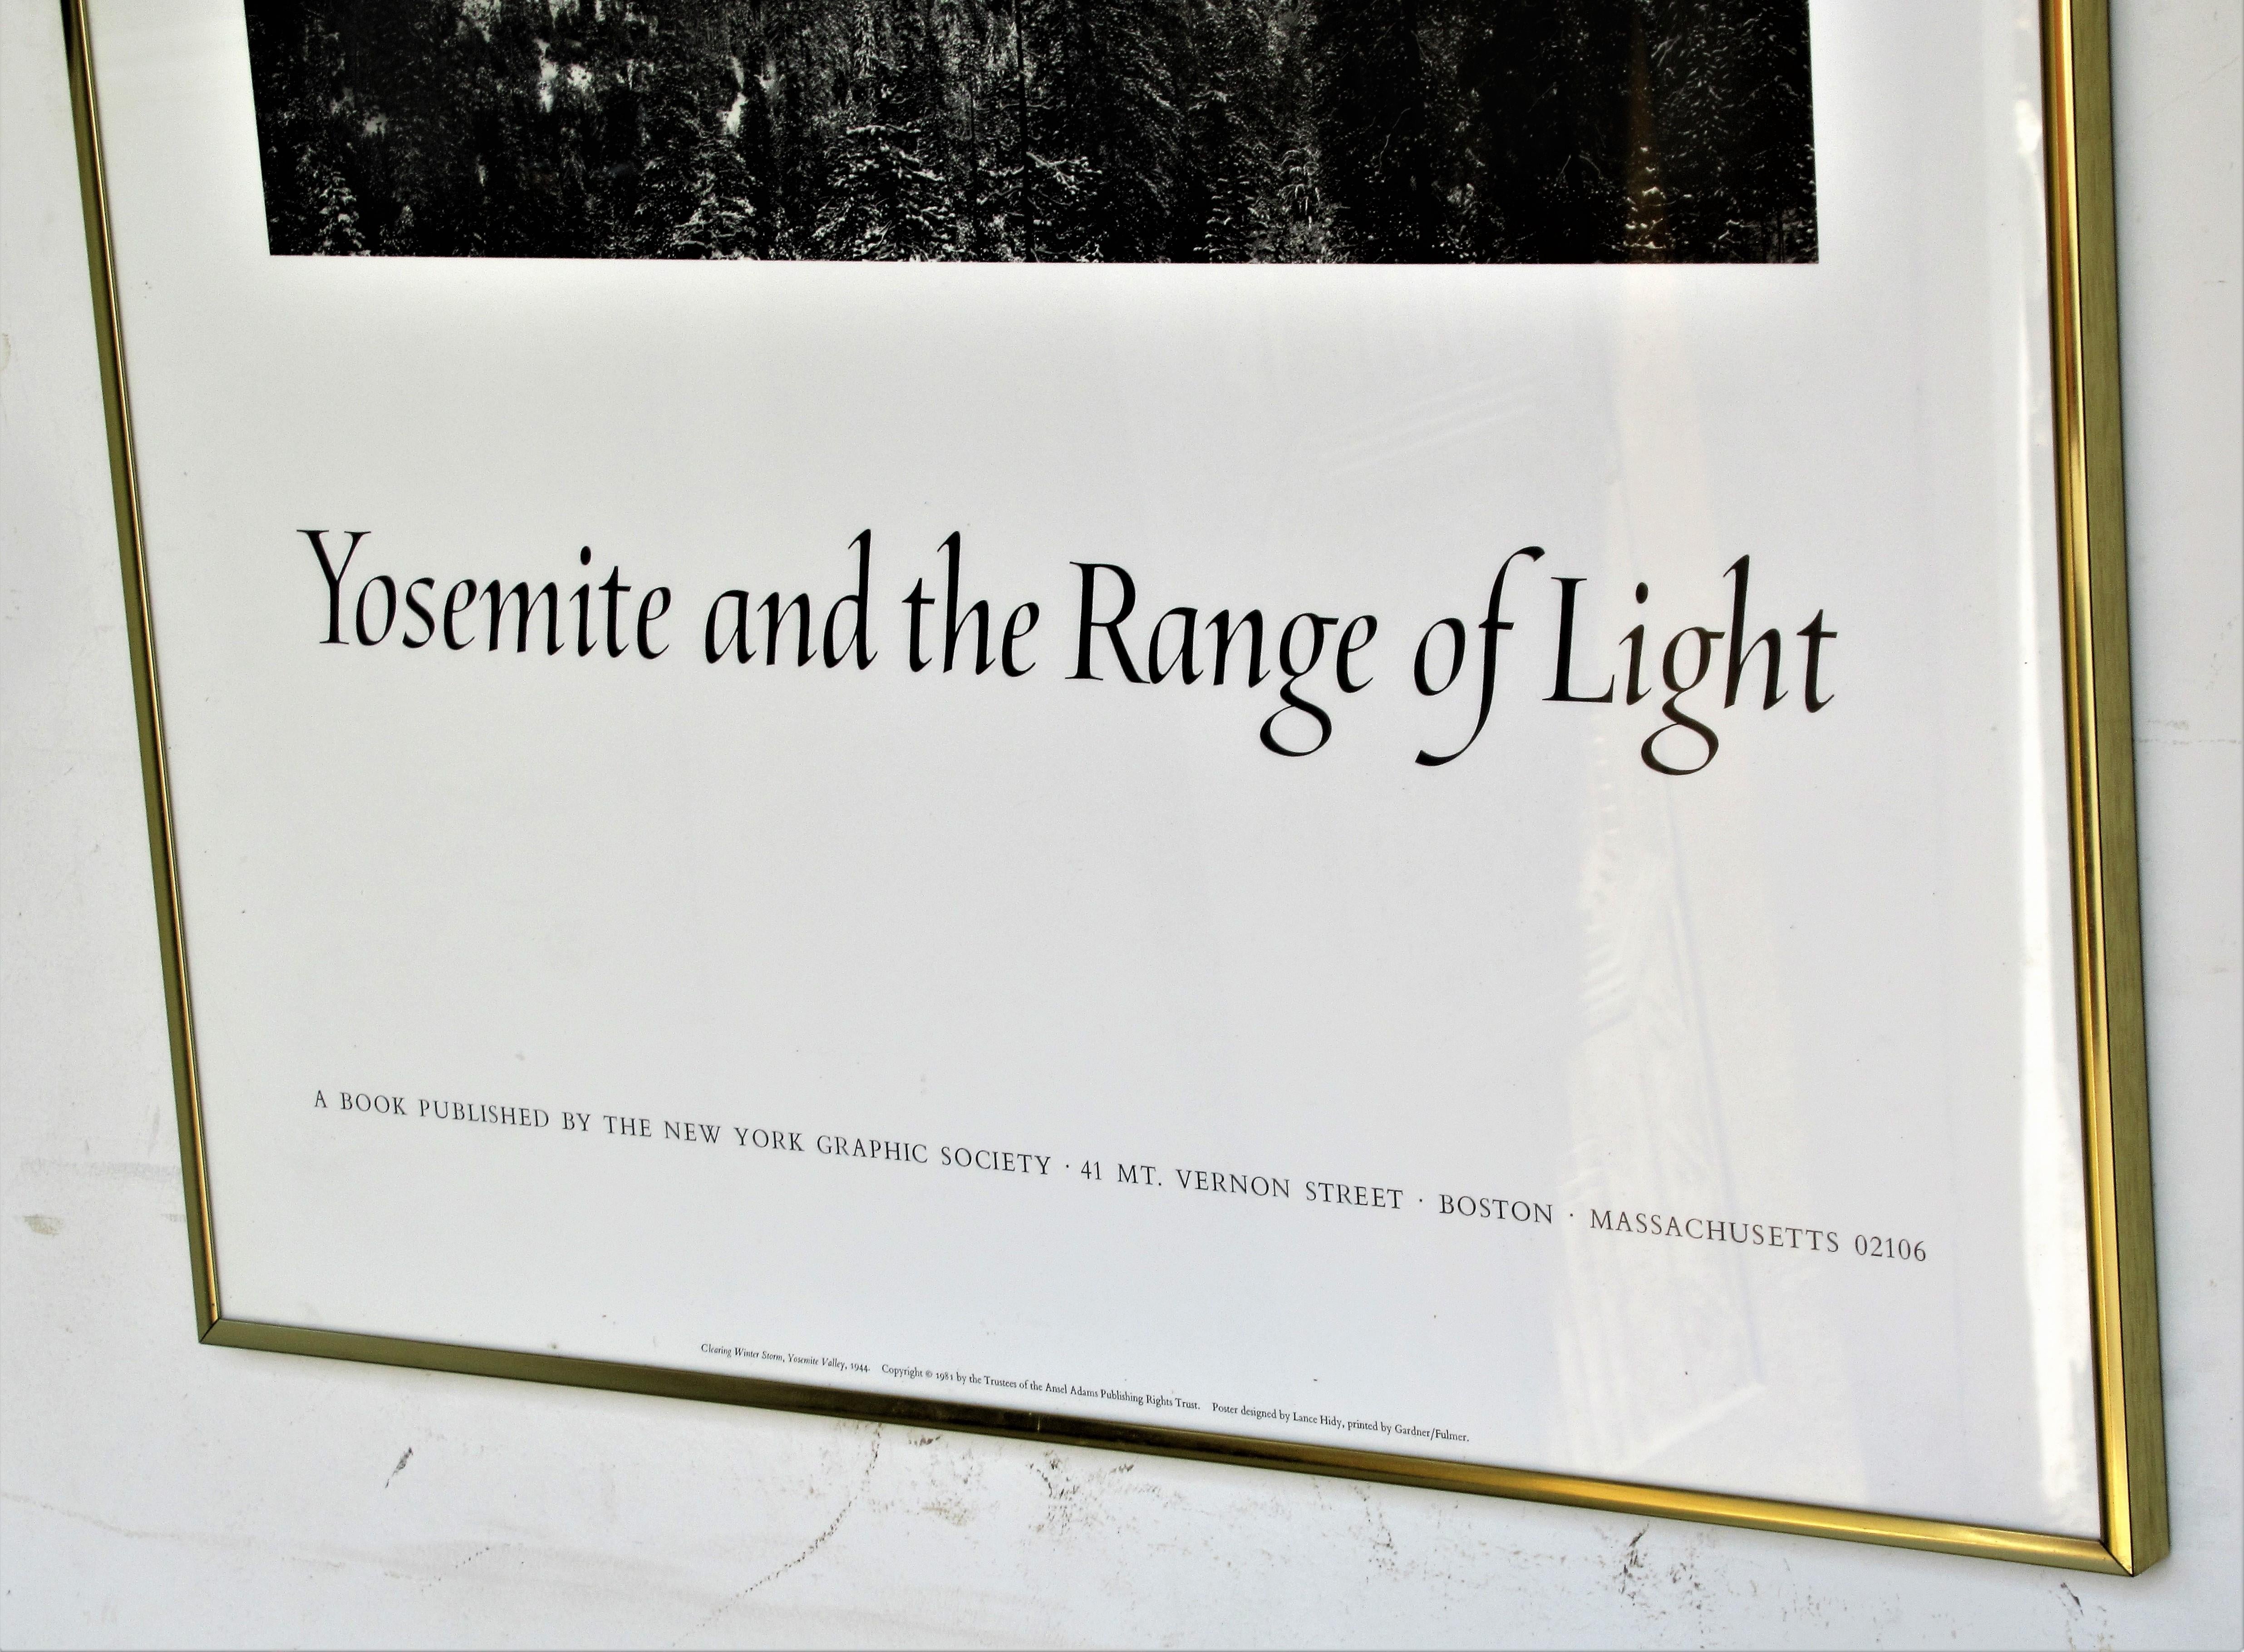 ansel adams yosemite and the range of light poster